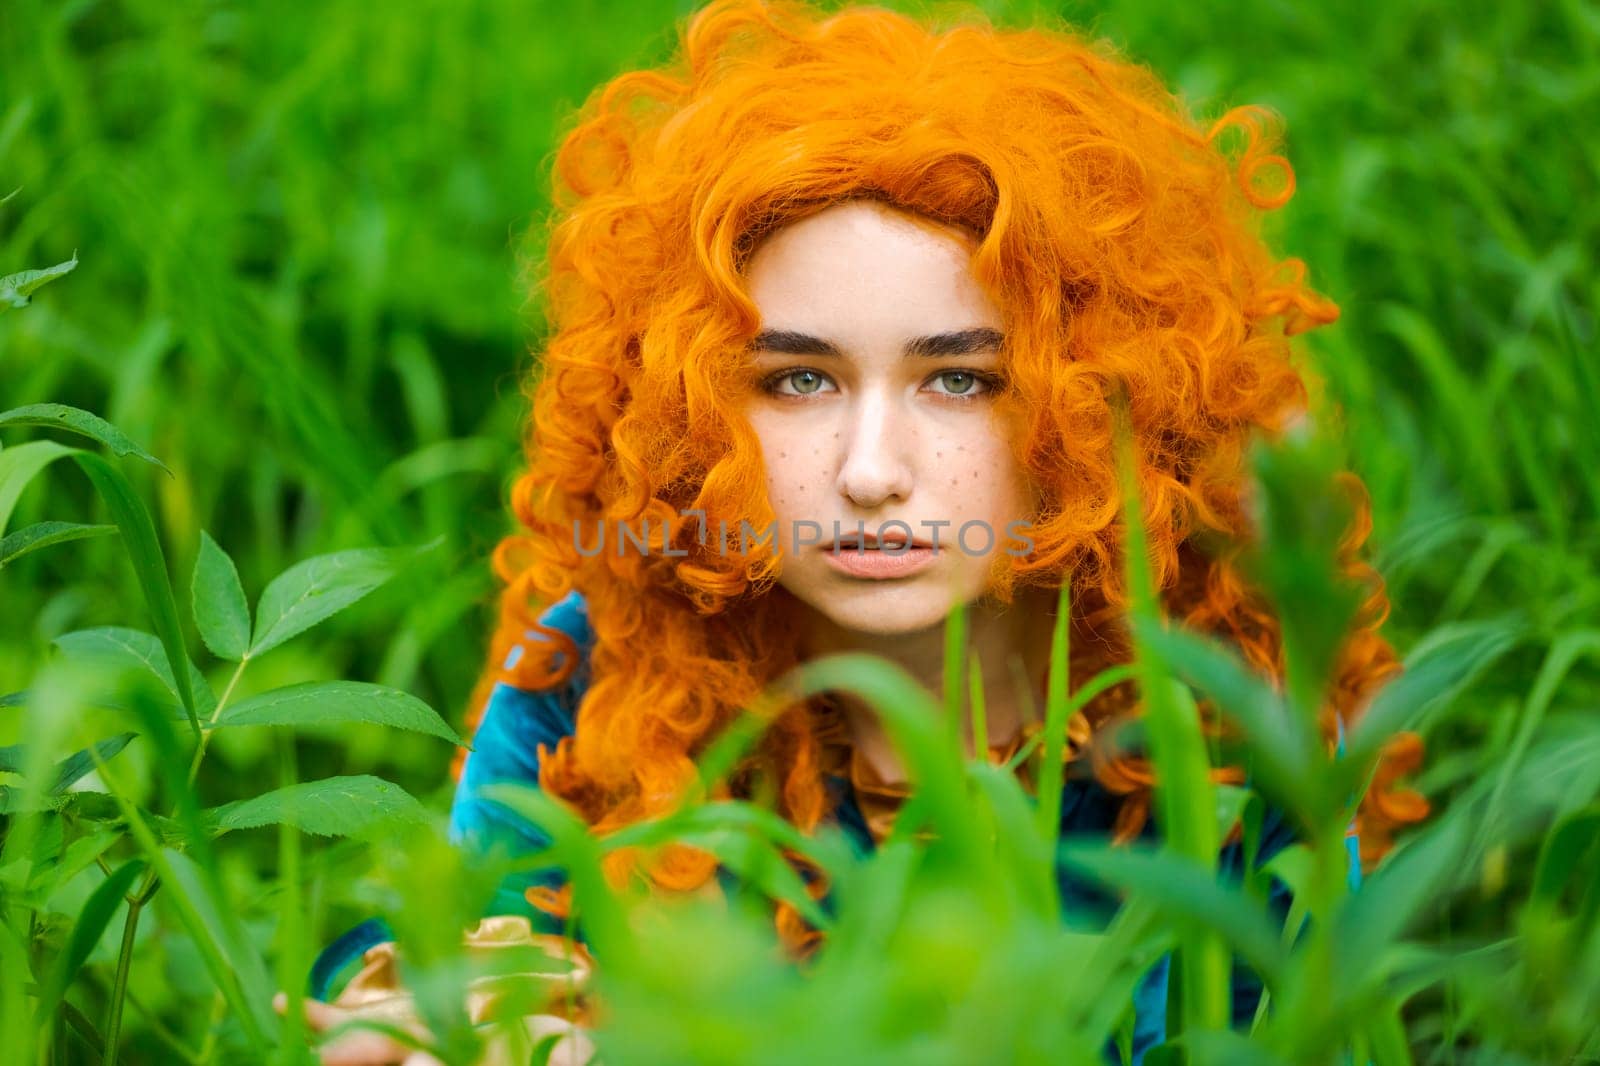 Cute girl in beautiful dress in an forest. Character cosplay festival portrait by EkaterinaPereslavtseva